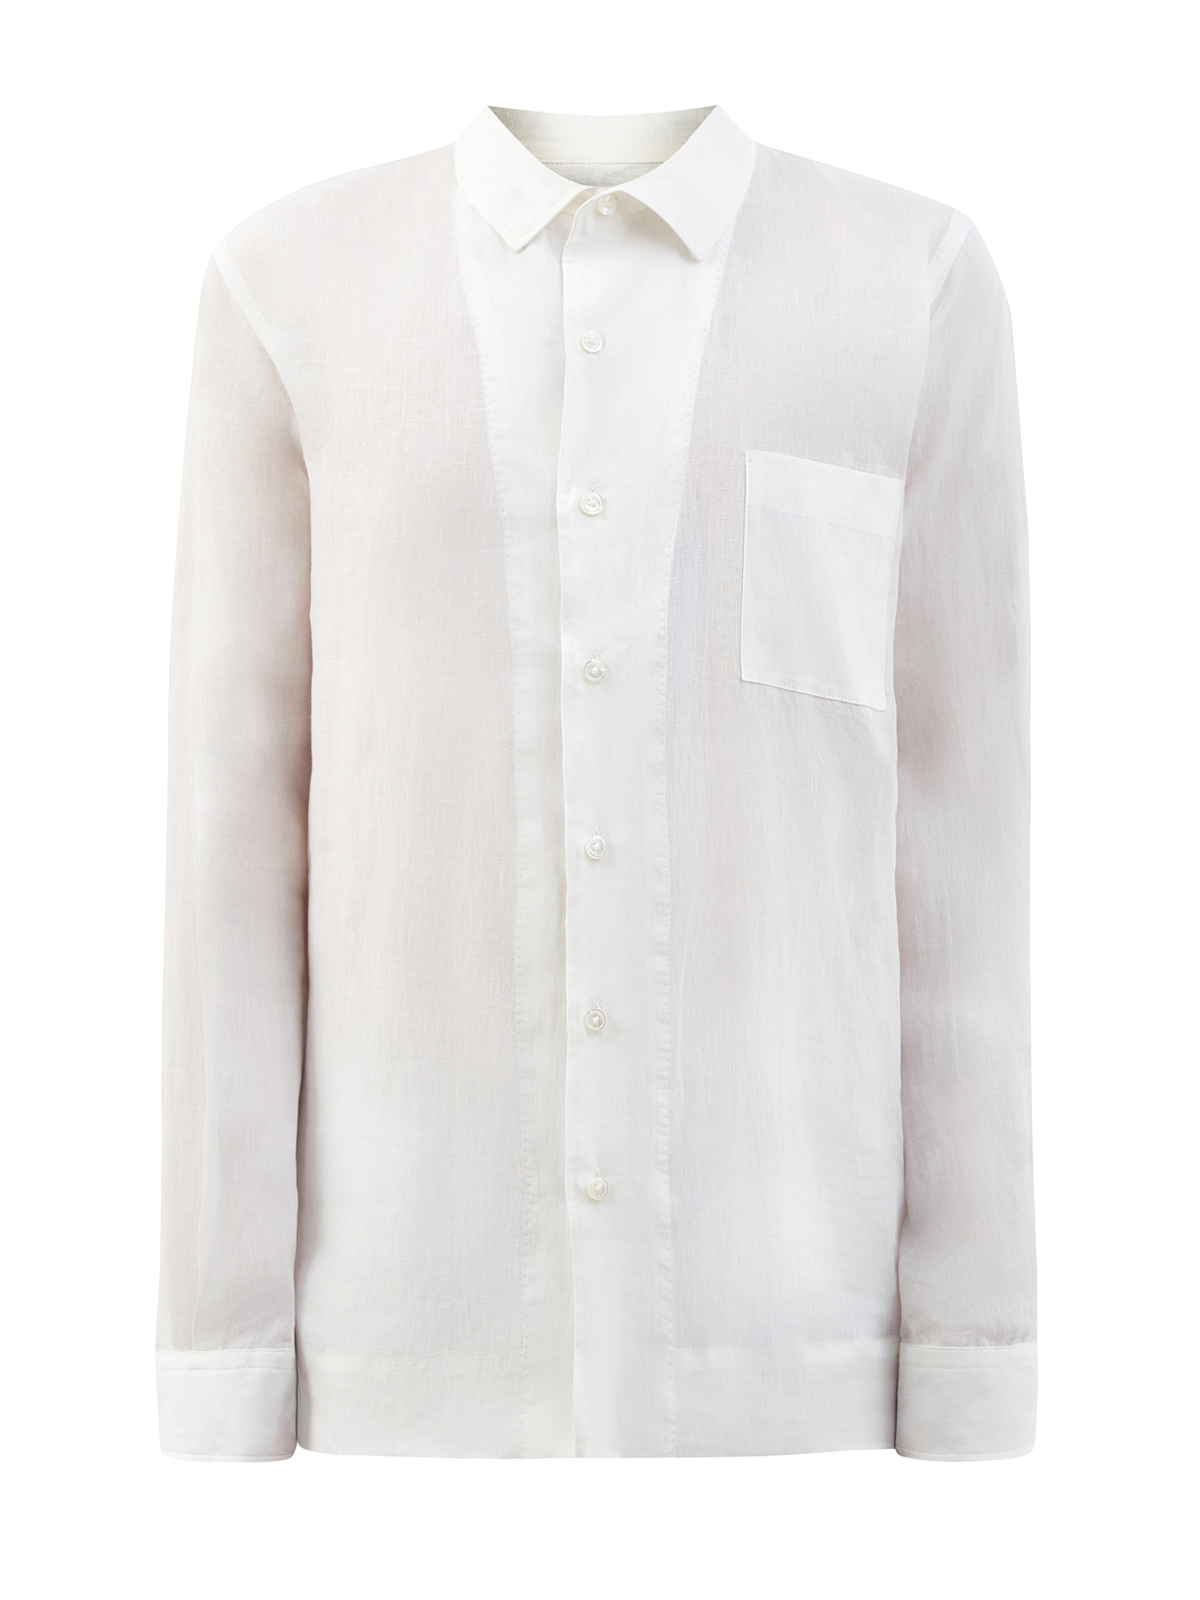 Рубашка в стиле leisure из дышащего льна CORTIGIANI, цвет белый, размер 52;56;58;60